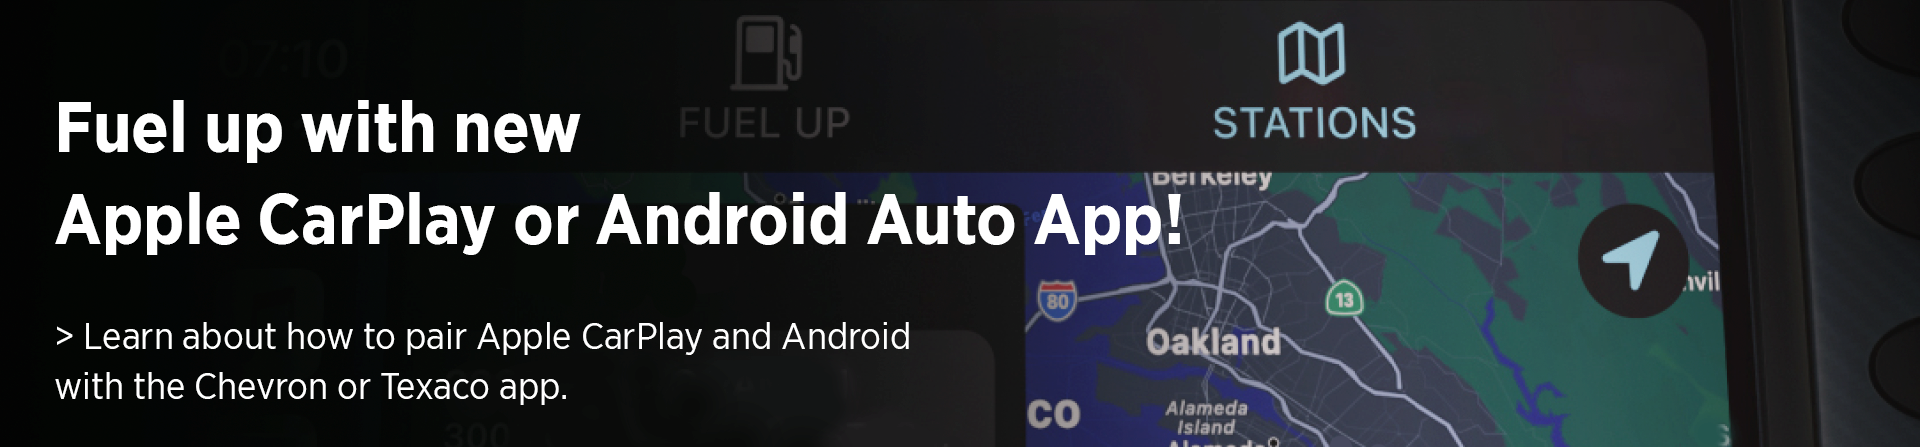 Apple CarPlay-Andoid Auto button